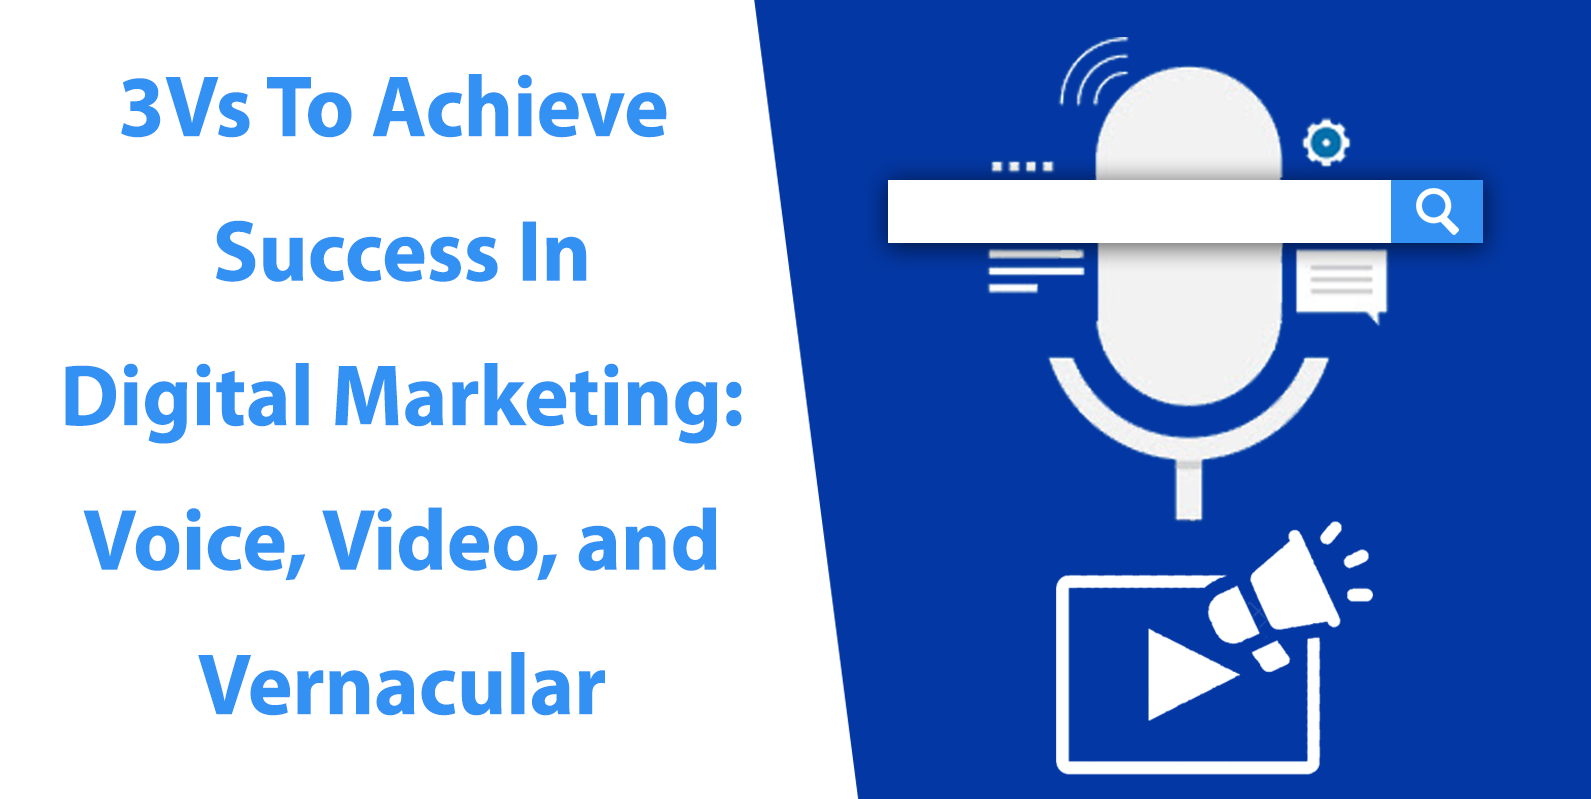 3Vs to Achieve Success in Digital Marketing: Voice, Video, Vernacular